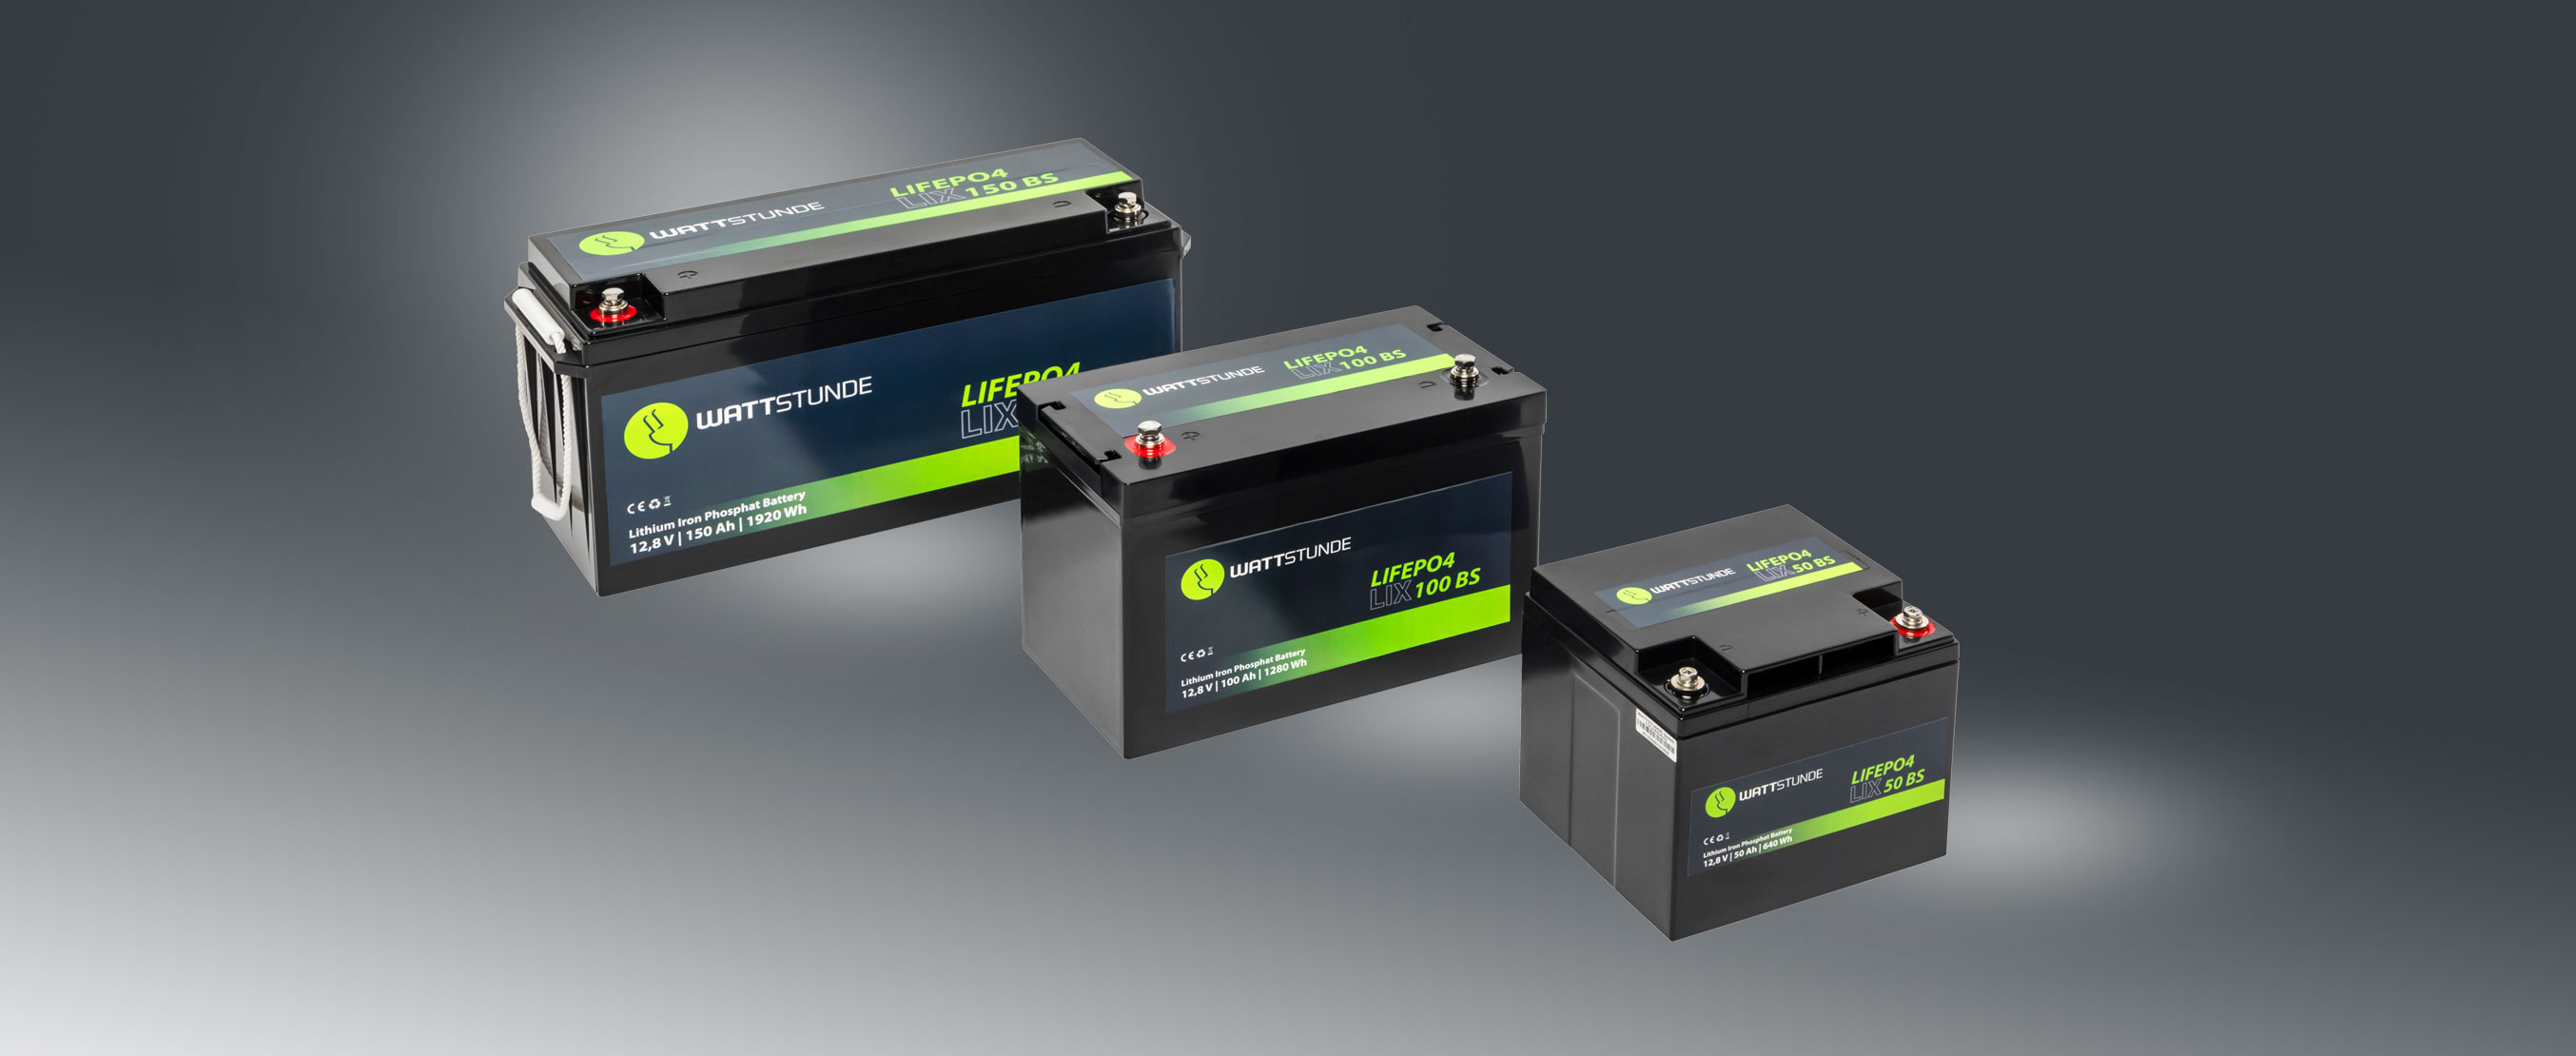 WATTSTUNDE® Lithium Battery 100Ah LiFePO4 / LIX100D-LT